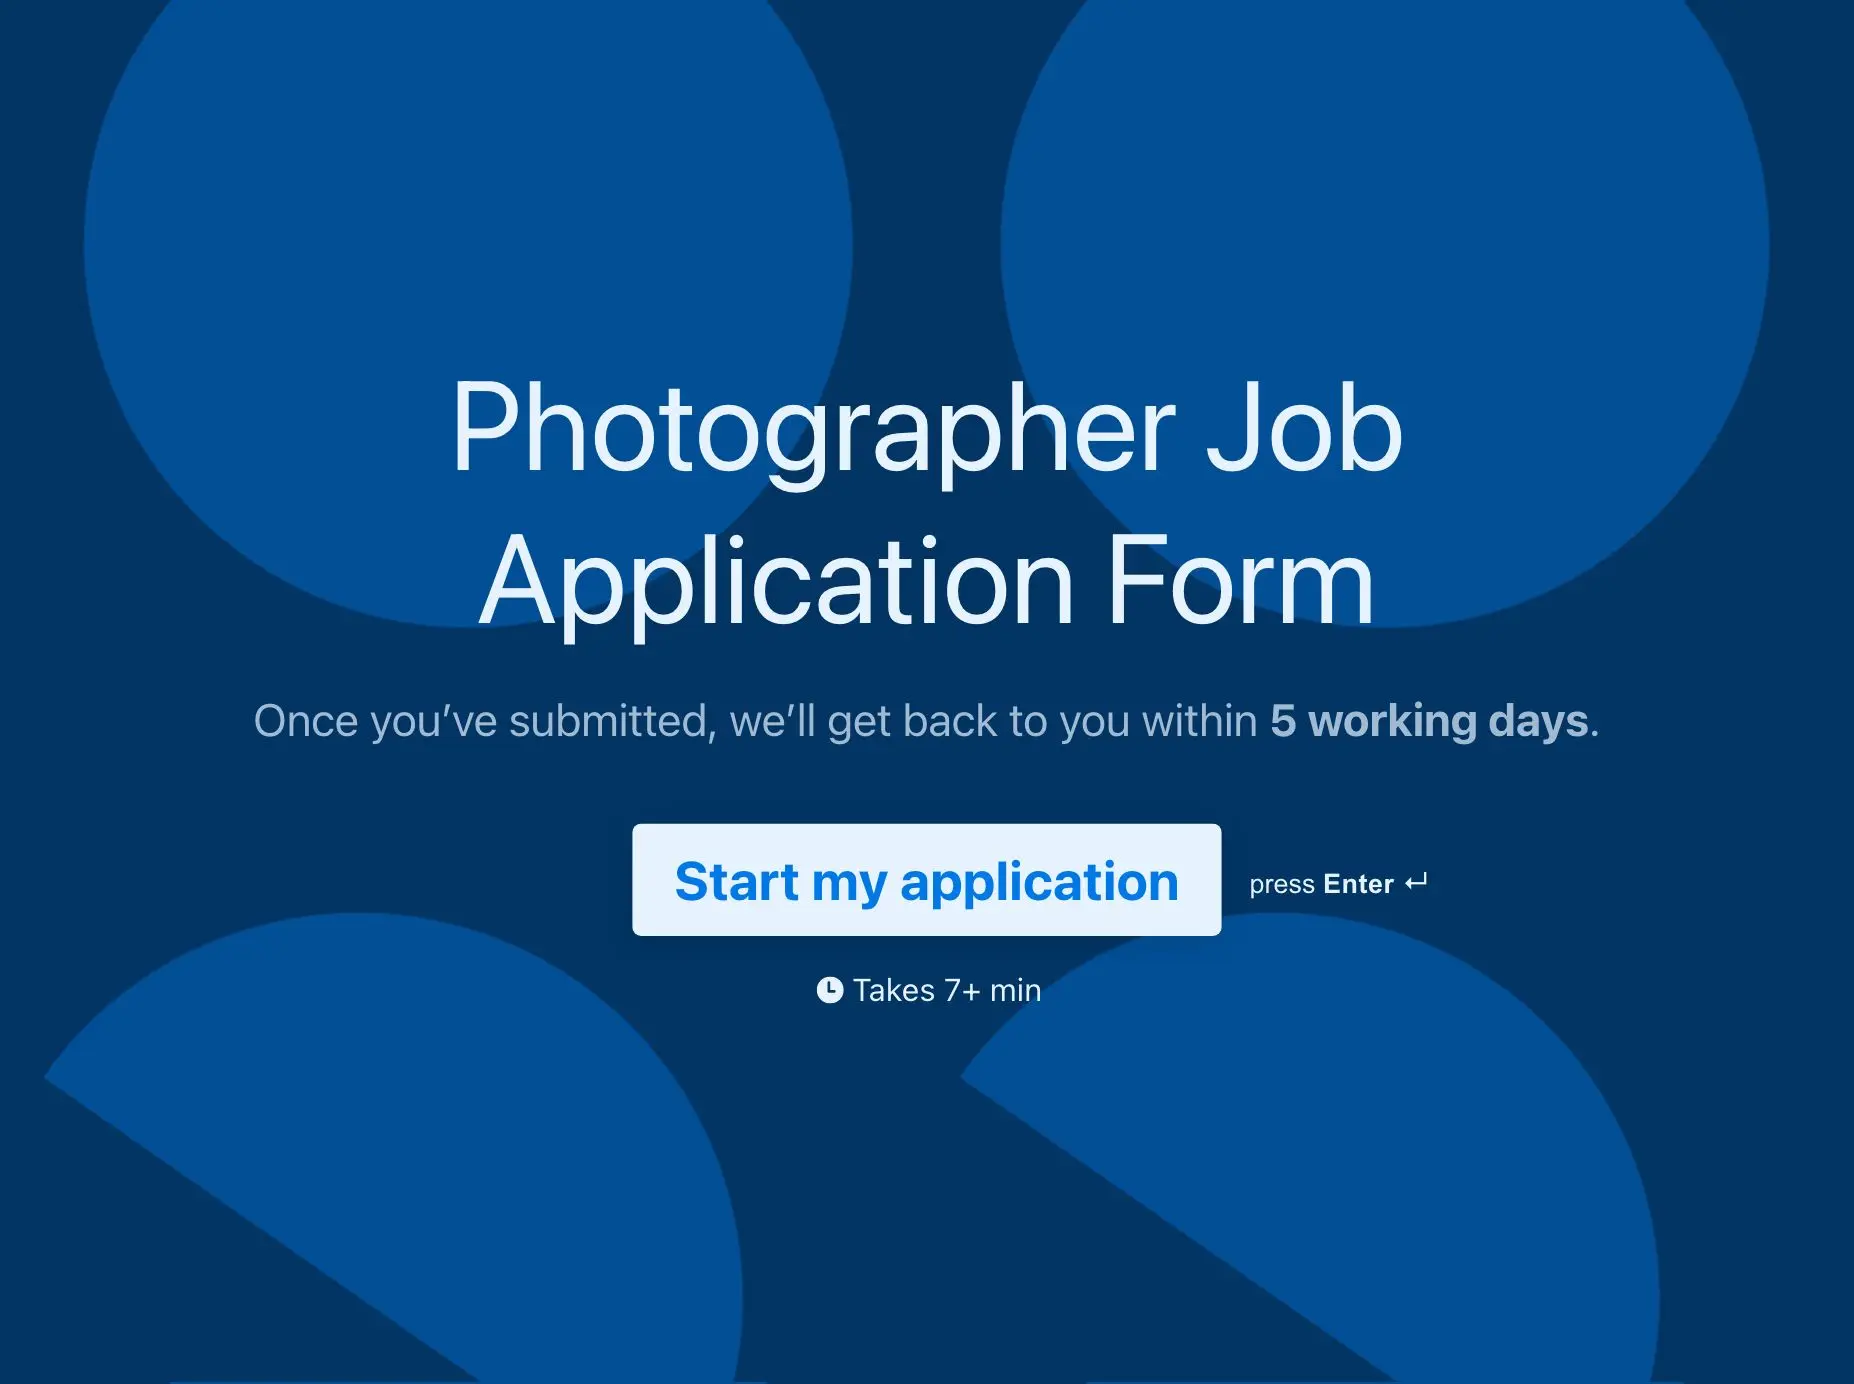 Photographer Job Application Form Template Hero